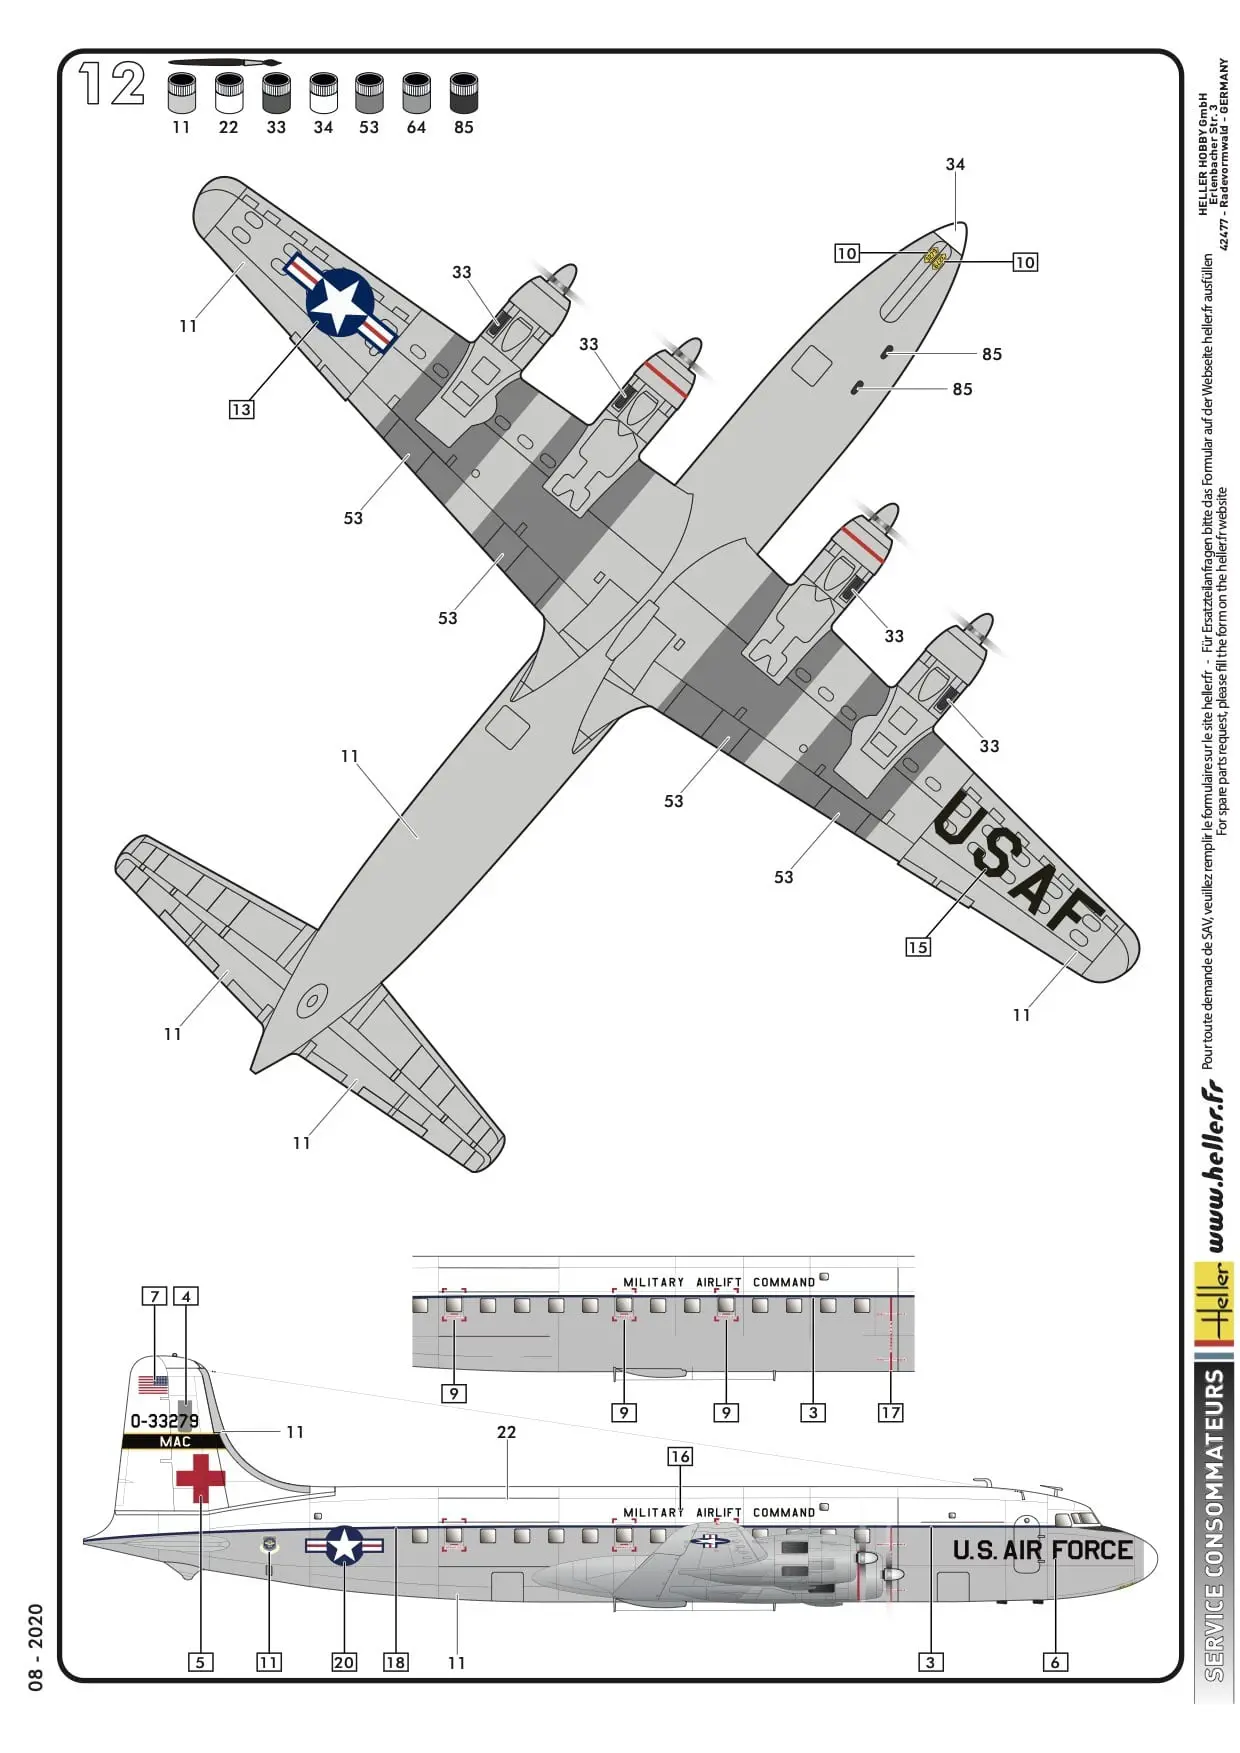 Douglas C-118 Liftmaster Heller 80317 Flugzeug Modellbausatz Kit 1:72 